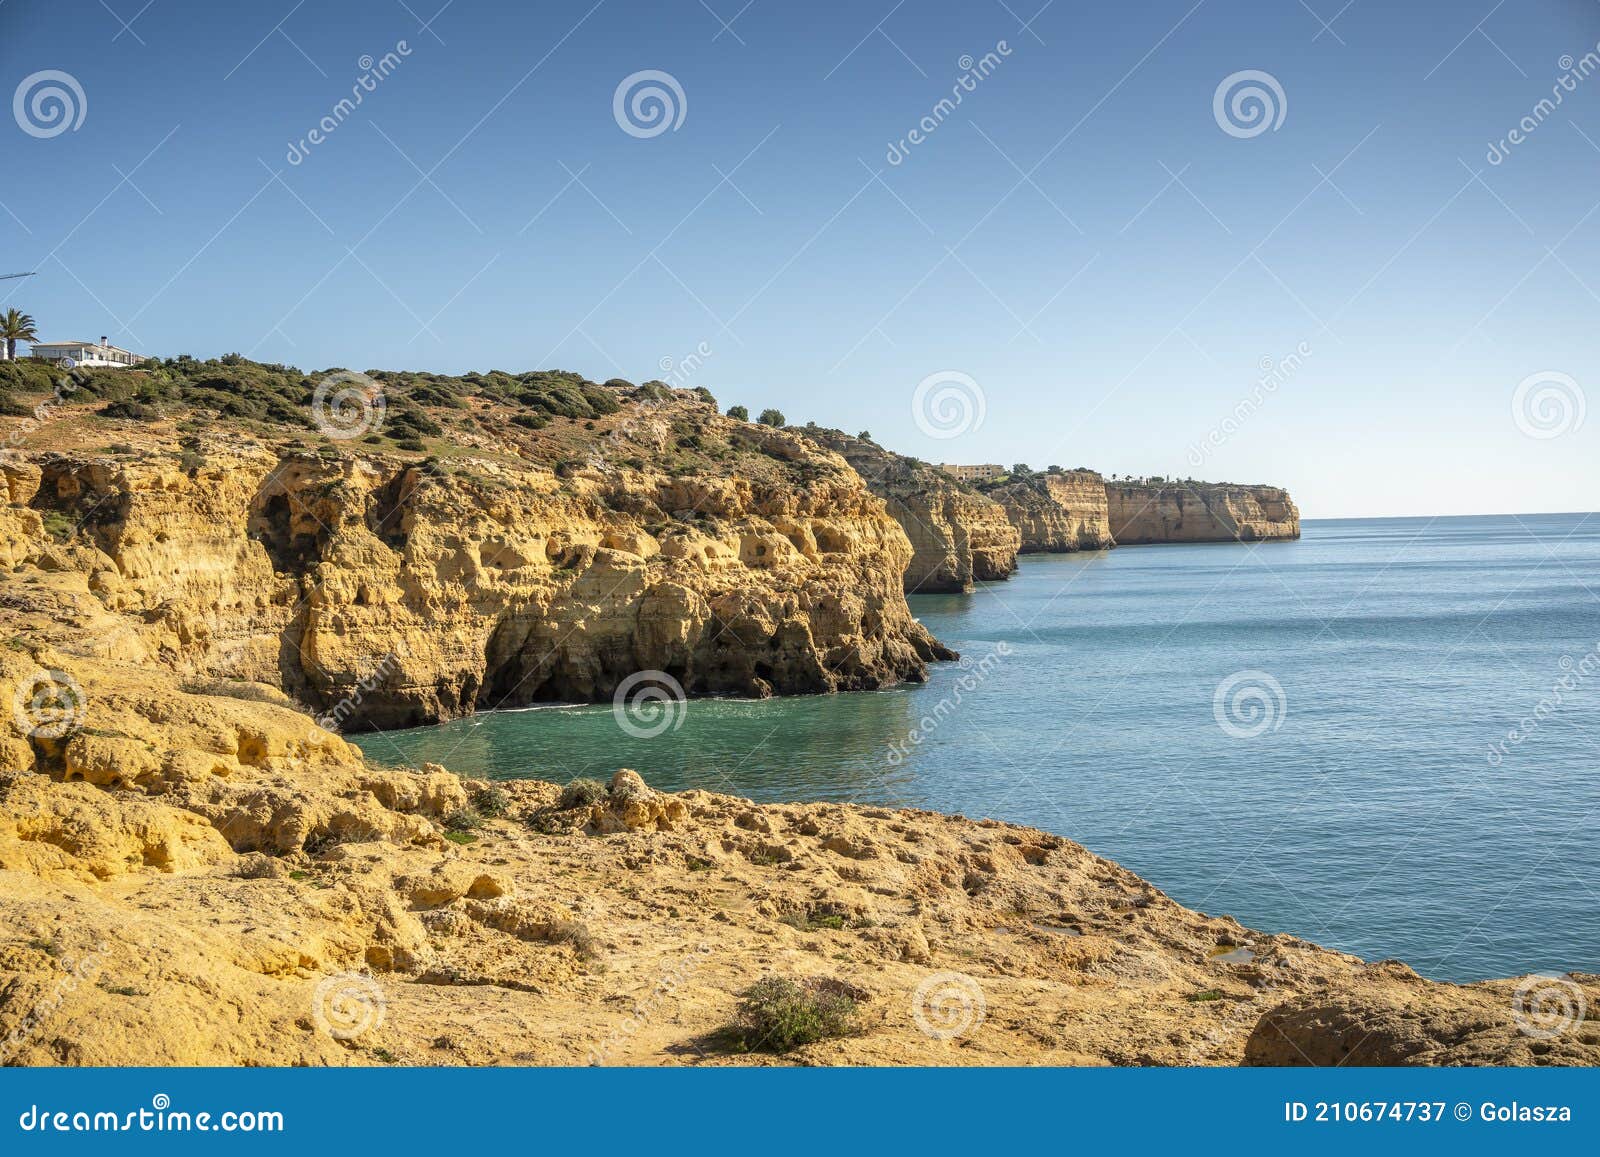 beautiful cliffs of algarve, algar seco, portugal